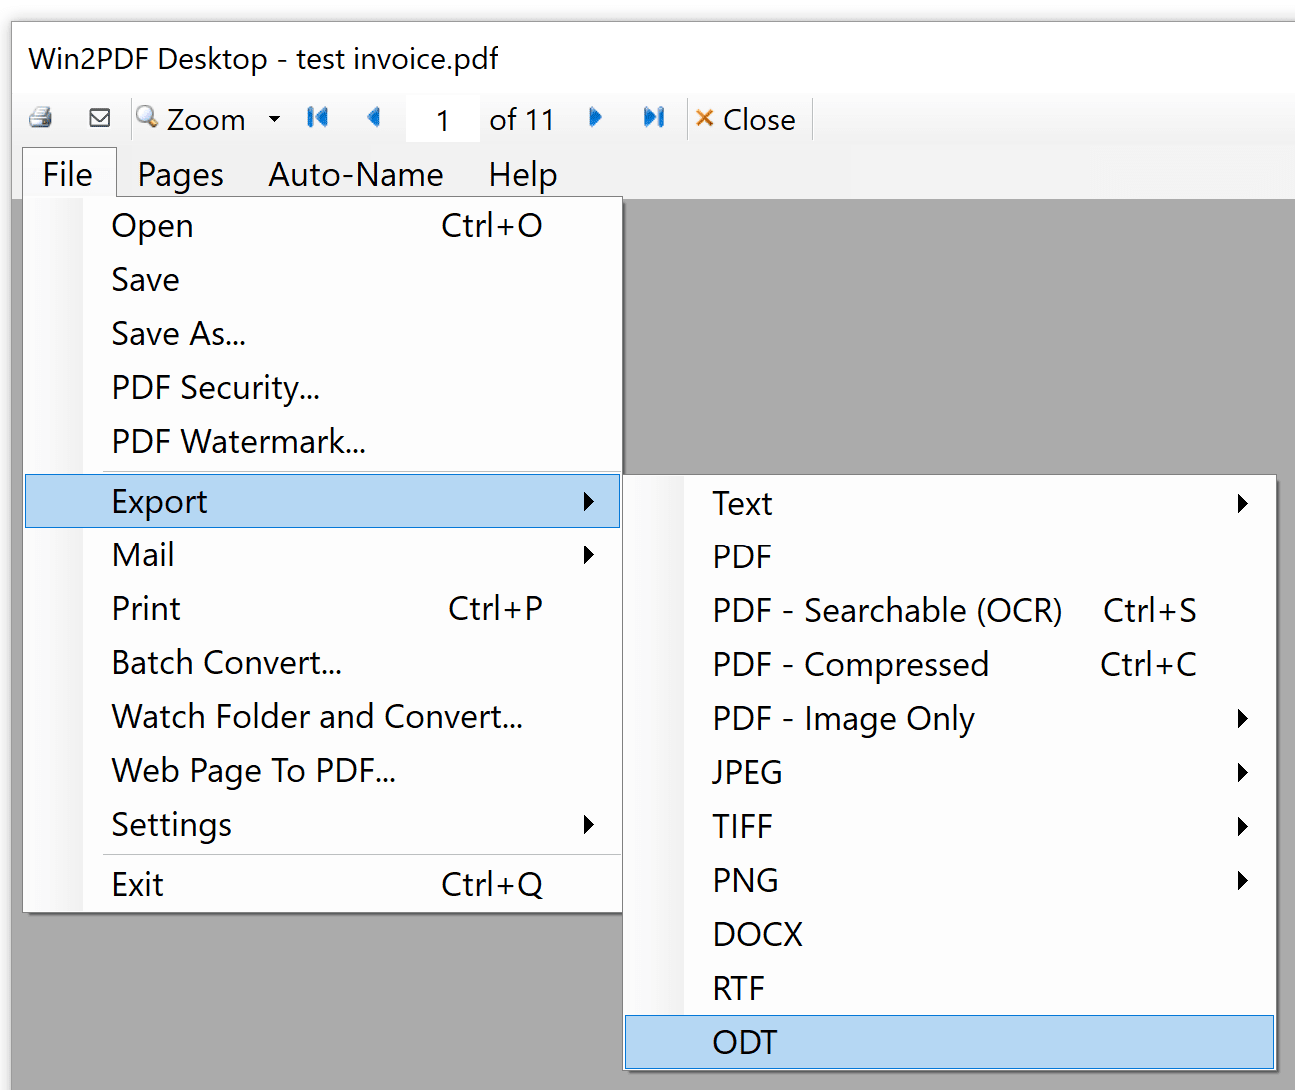 Win2PDF Desktop - Export PDF to ODT